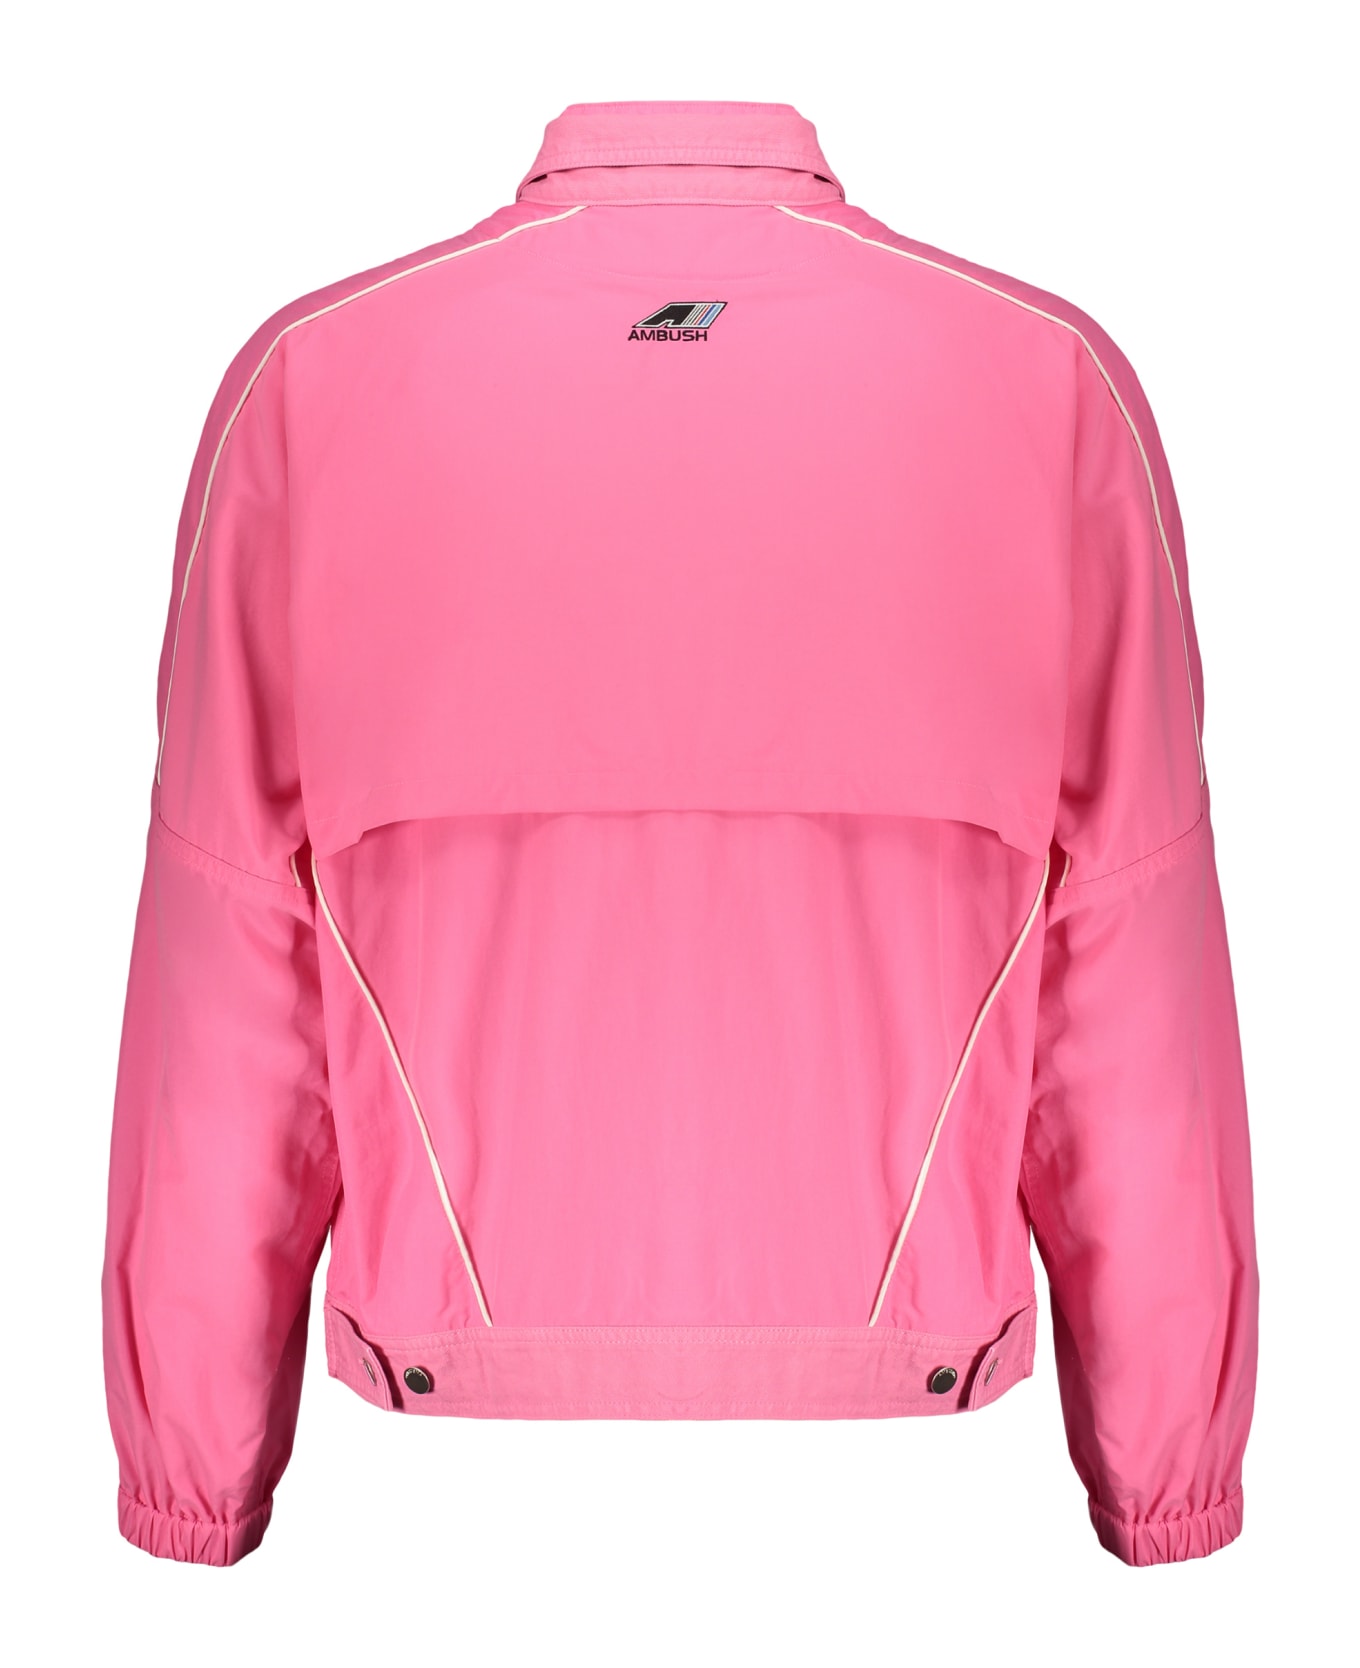 AMBUSH Nylon Jacket - Pink